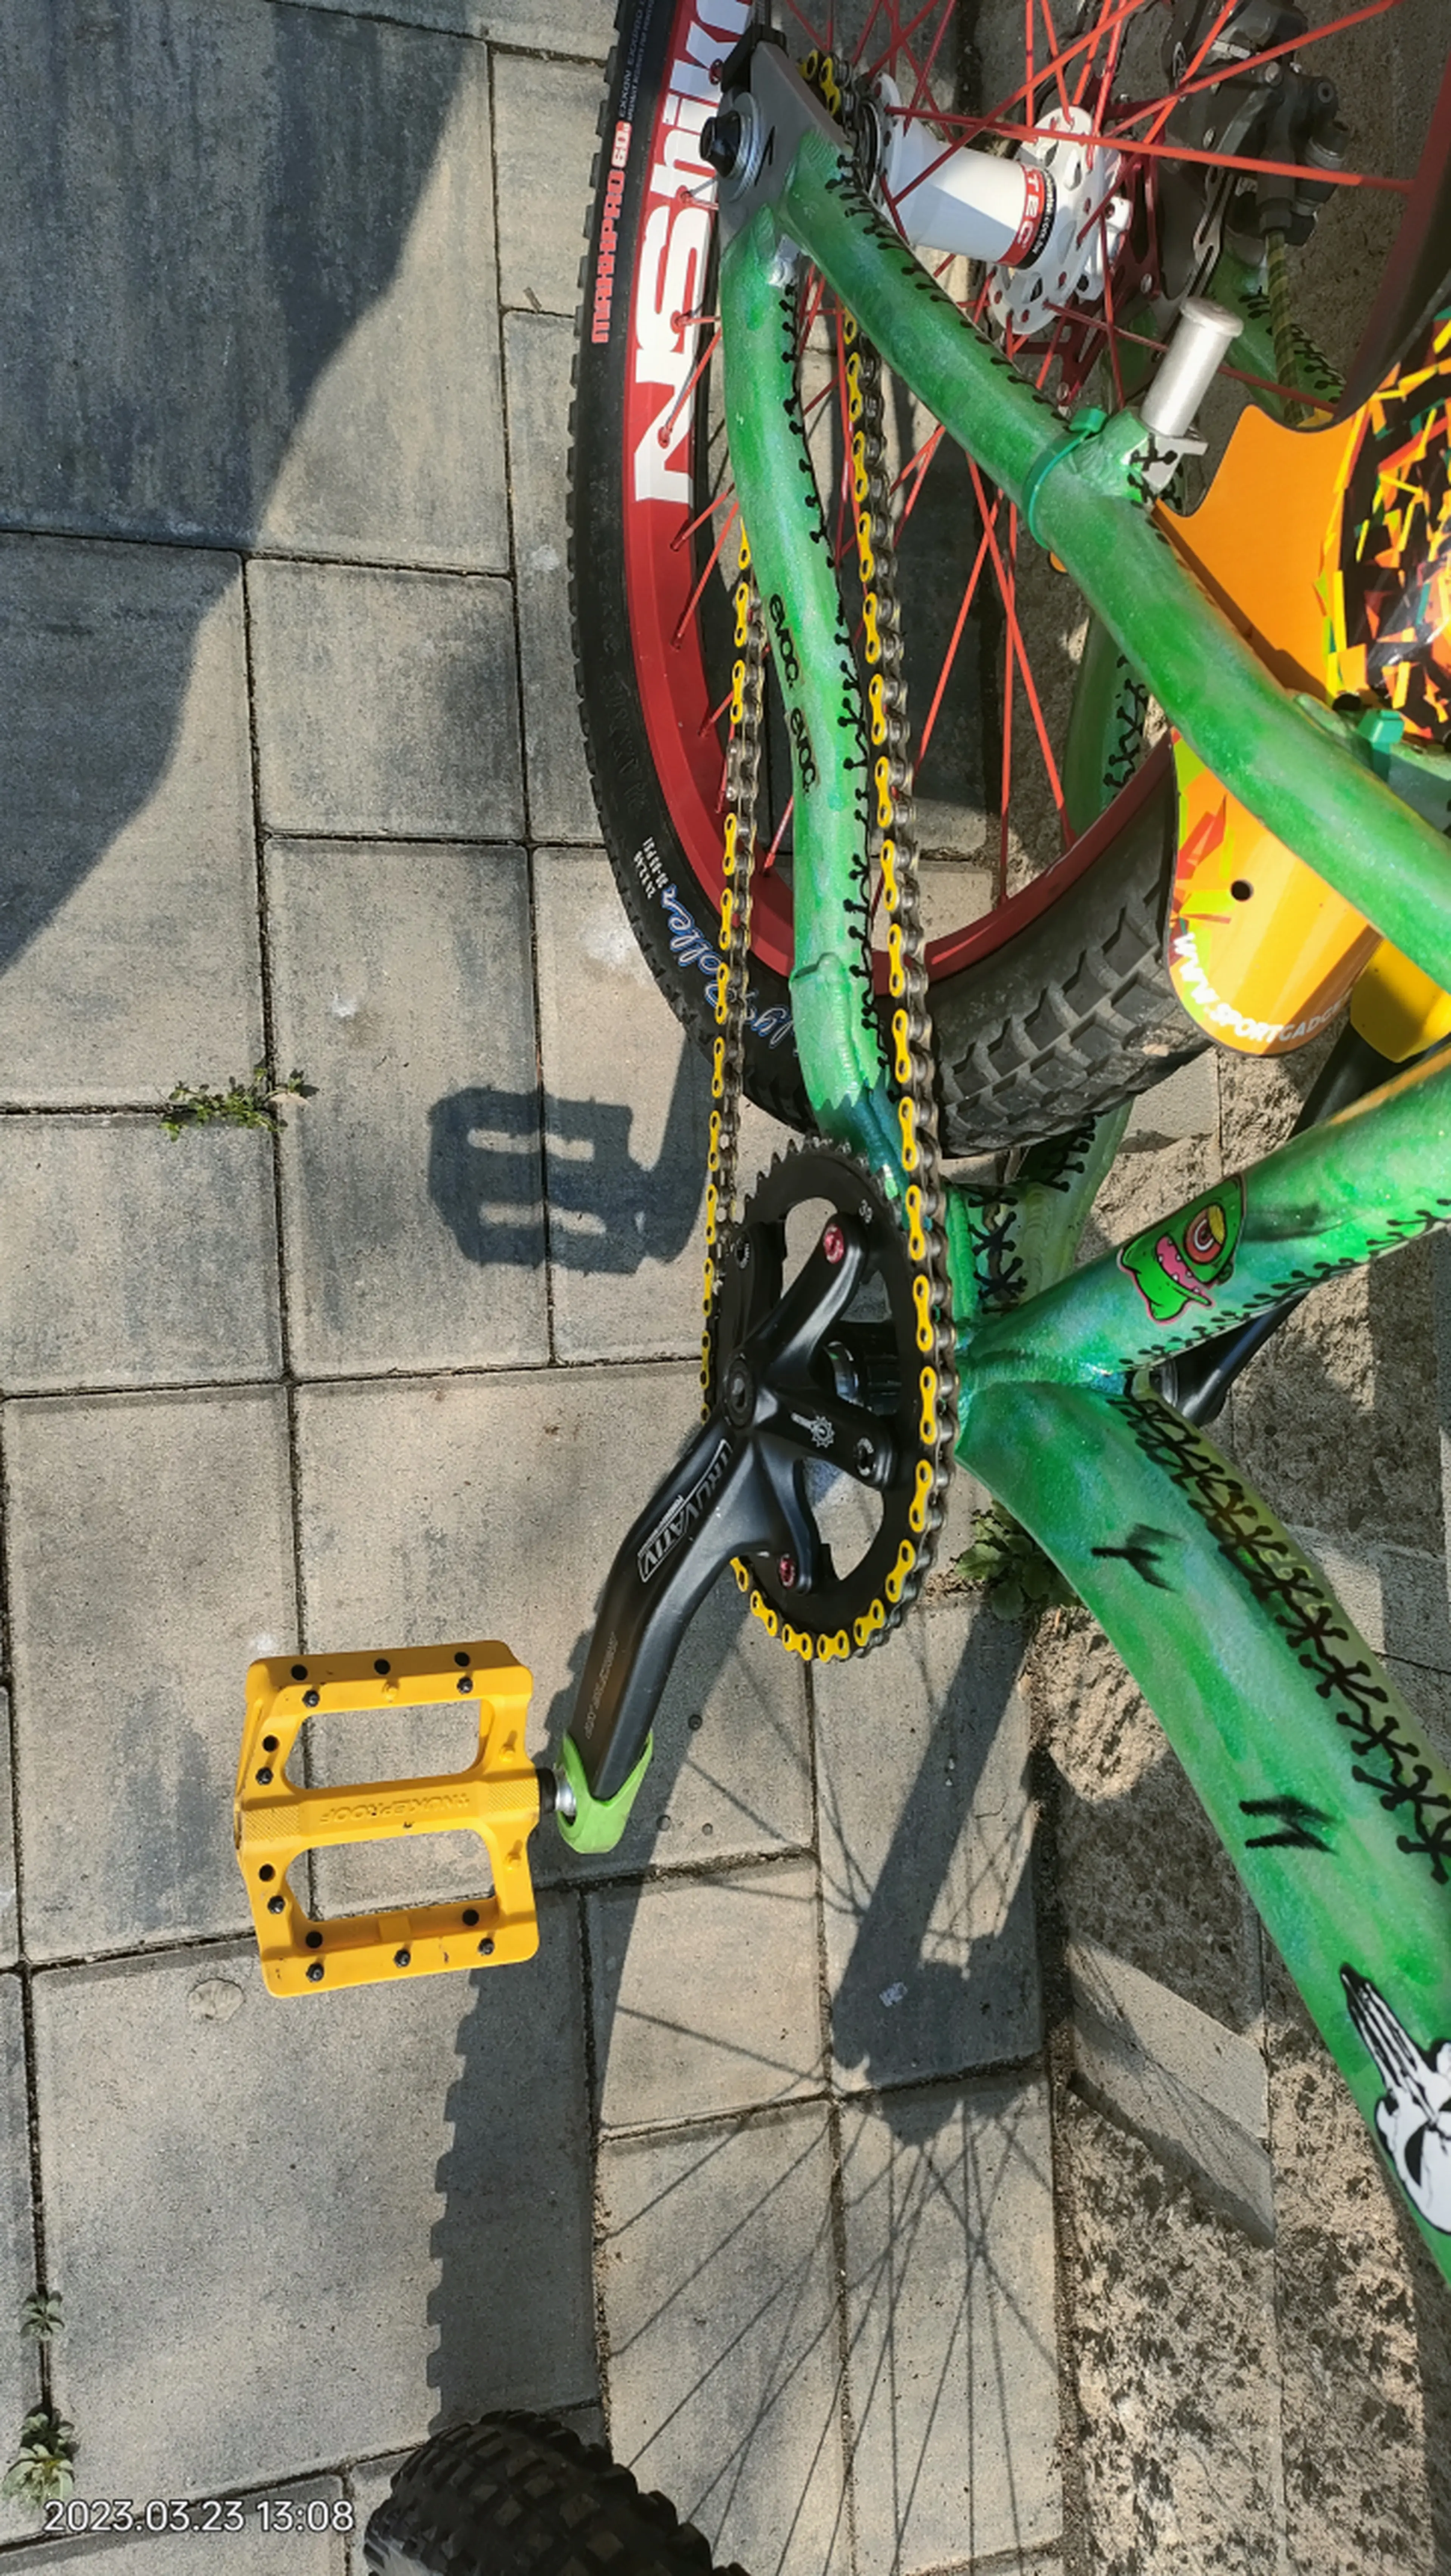 9. Bicicleta dirt polarx manual 24 mullet